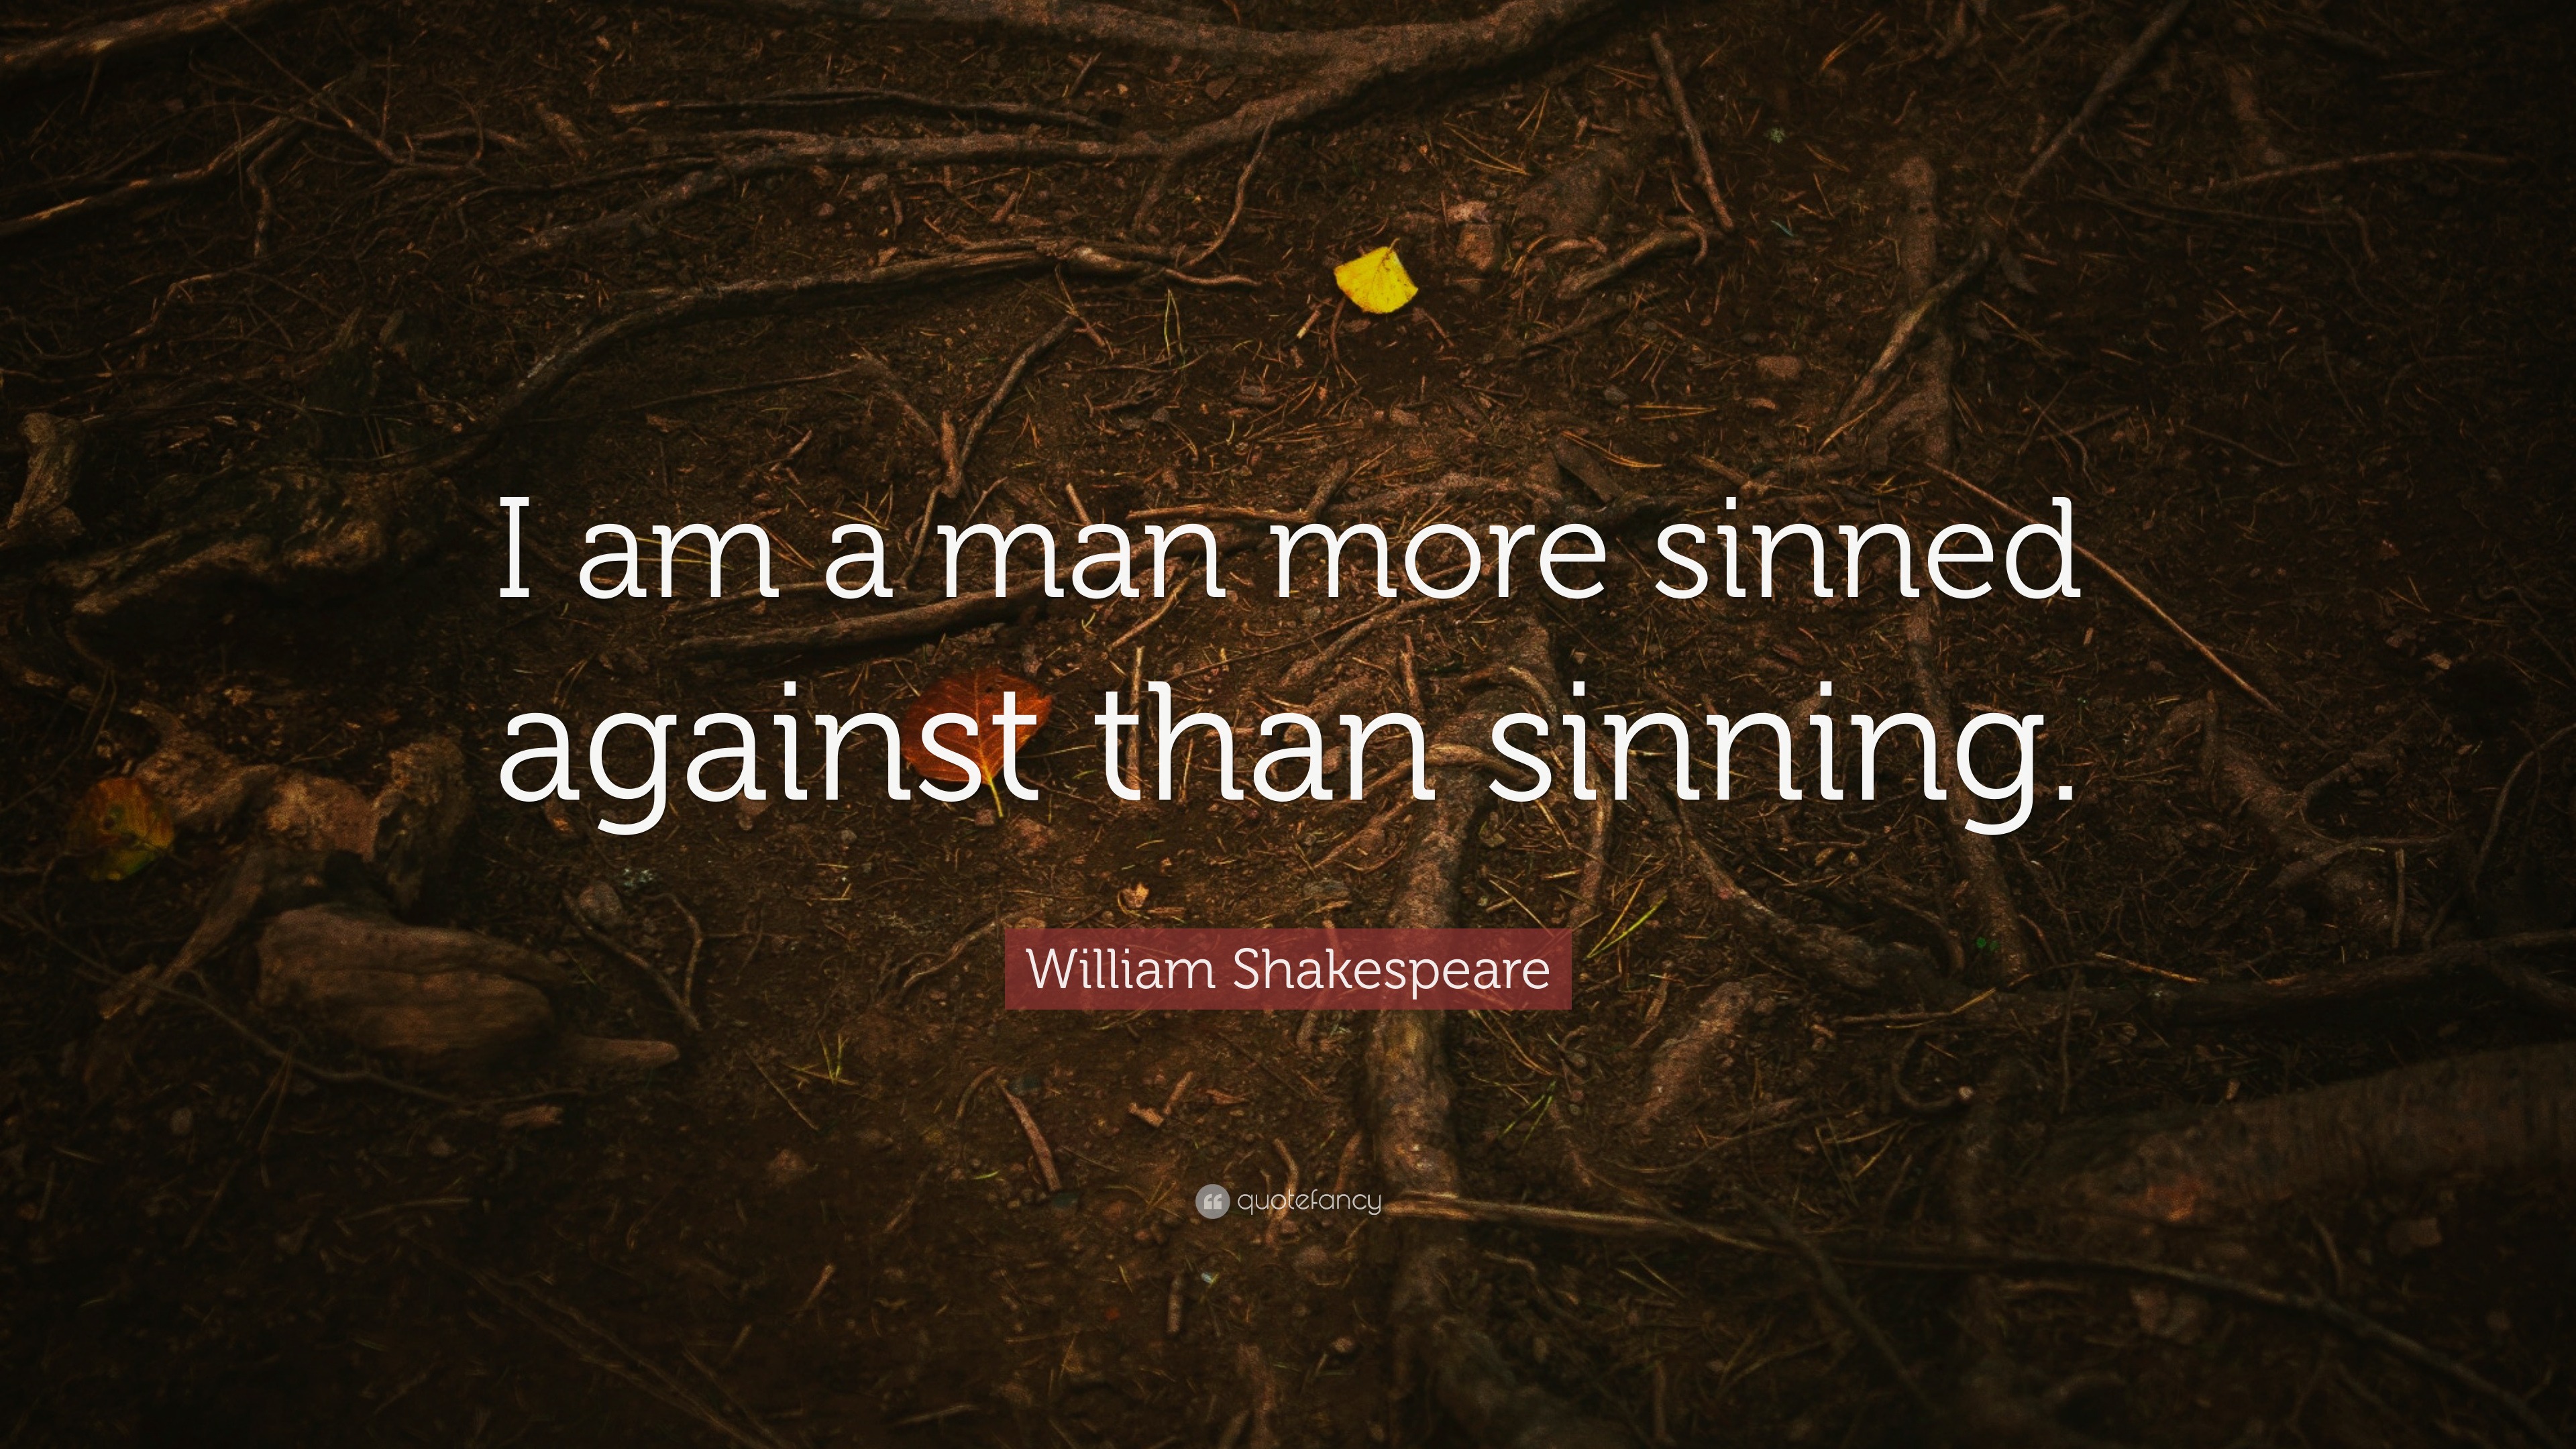 sinned against than sinning